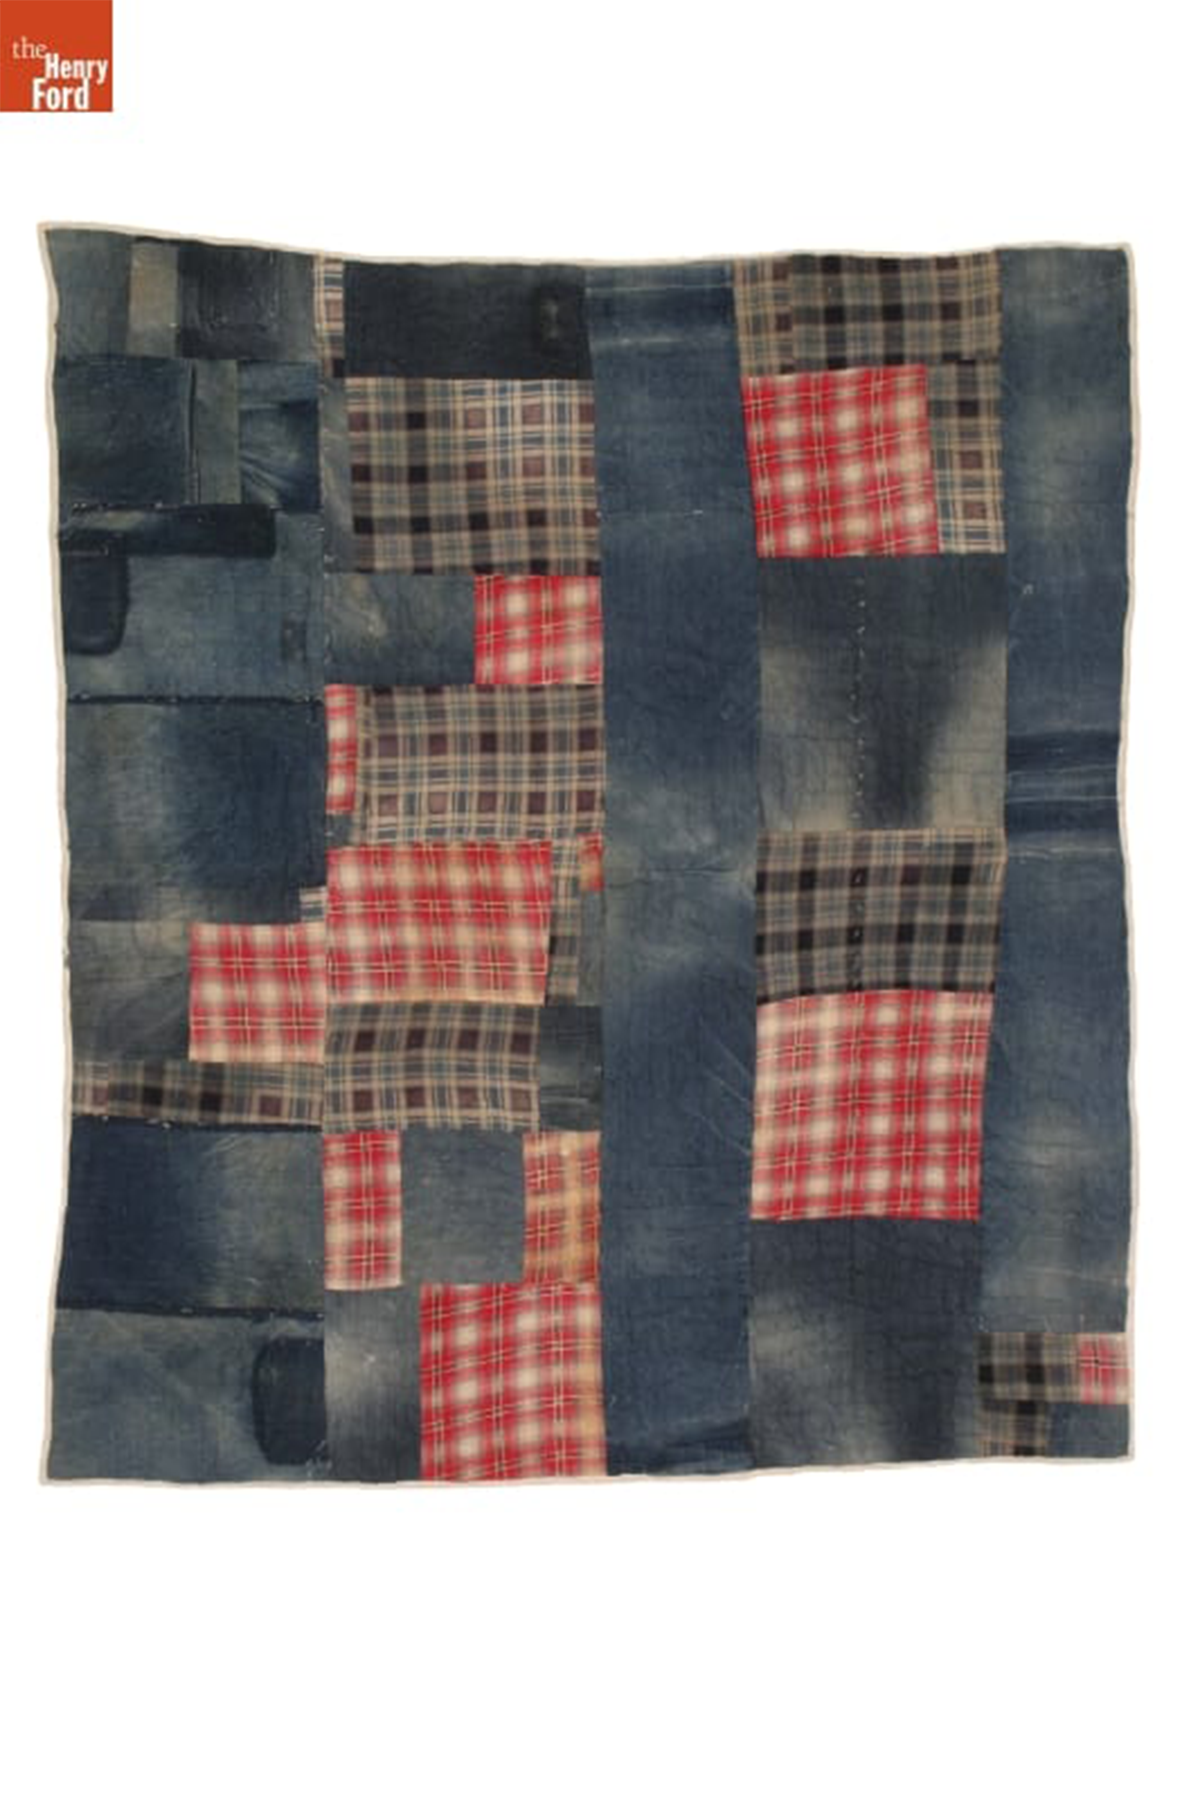 Strip Quilt Made of Work Clothes by Susana Allen Hunter, 1965-1970